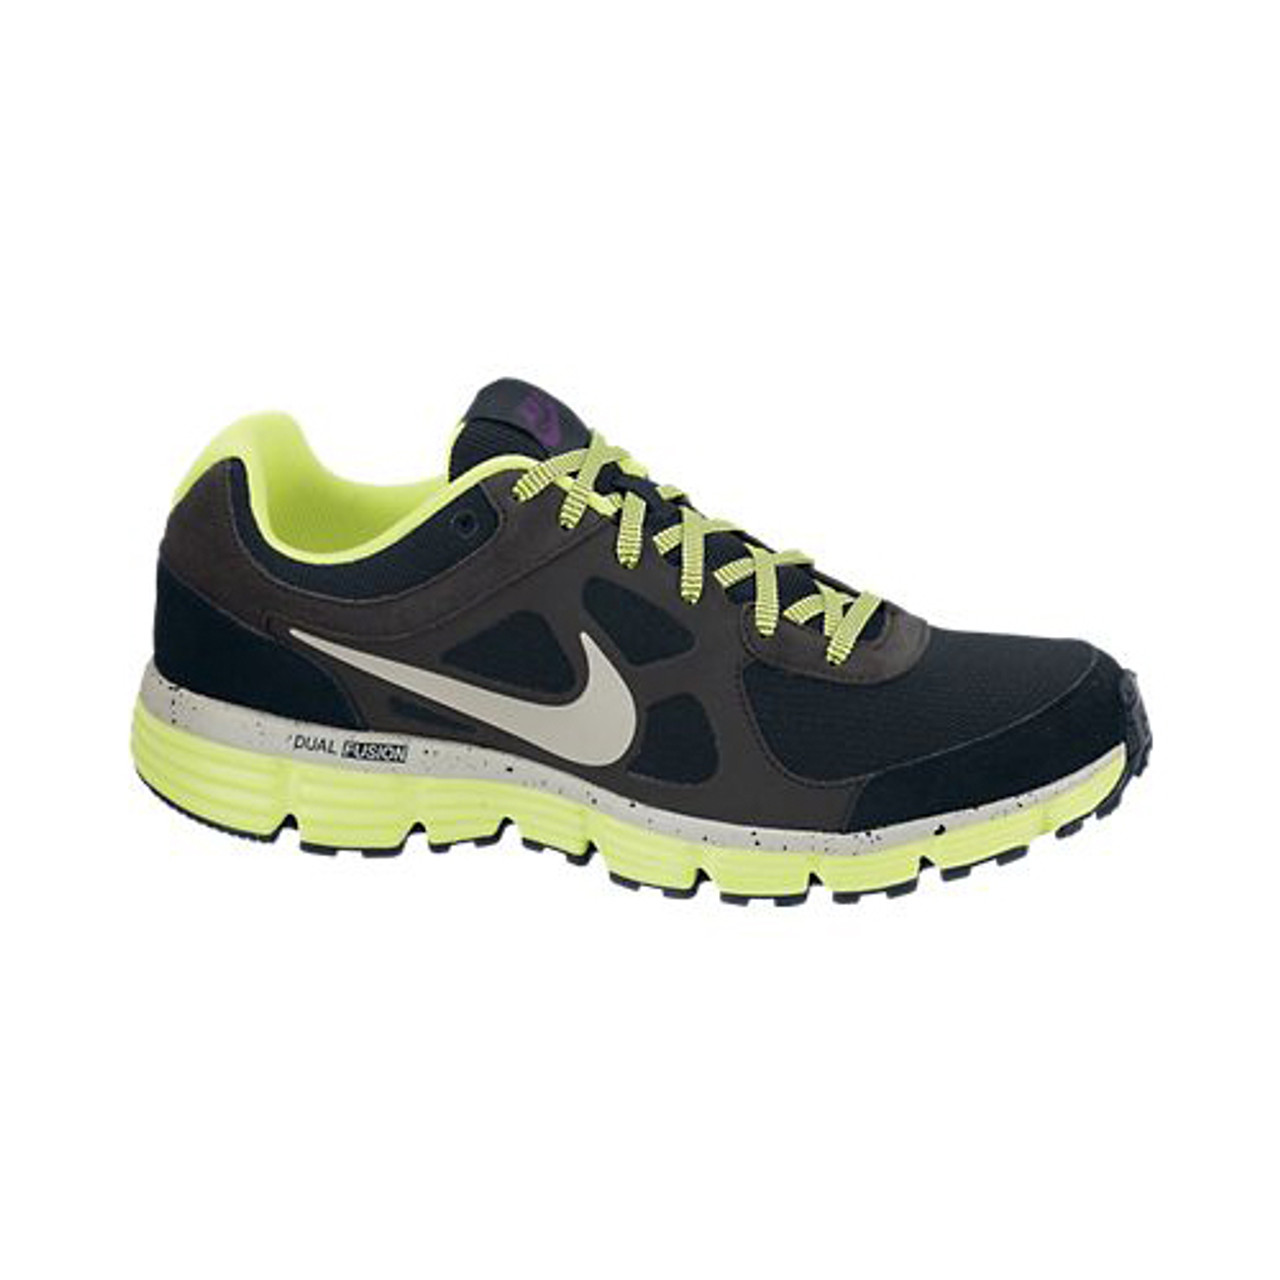 Error móvil colateral Nike Dual Fusion Forever Black/Volt Mens Running Shoes -  Black/Anthracite/Volt/Pale Grey | Discount Nike Men's Athletic & More -  Shoolu.com | Shoolu.com